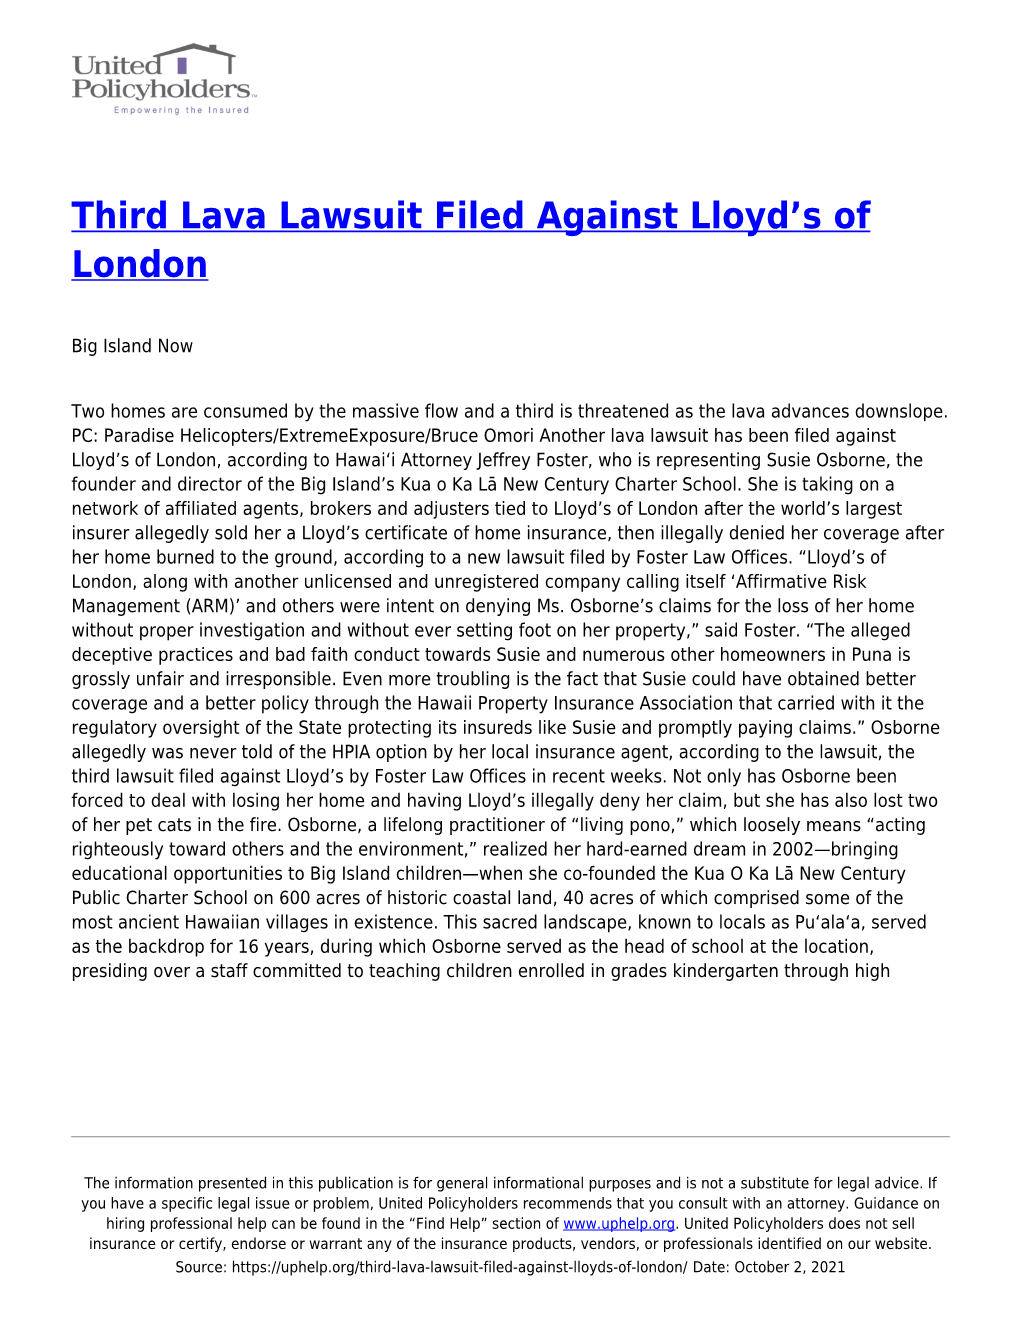 Third Lava Lawsuit Filed Against Lloyd's of London